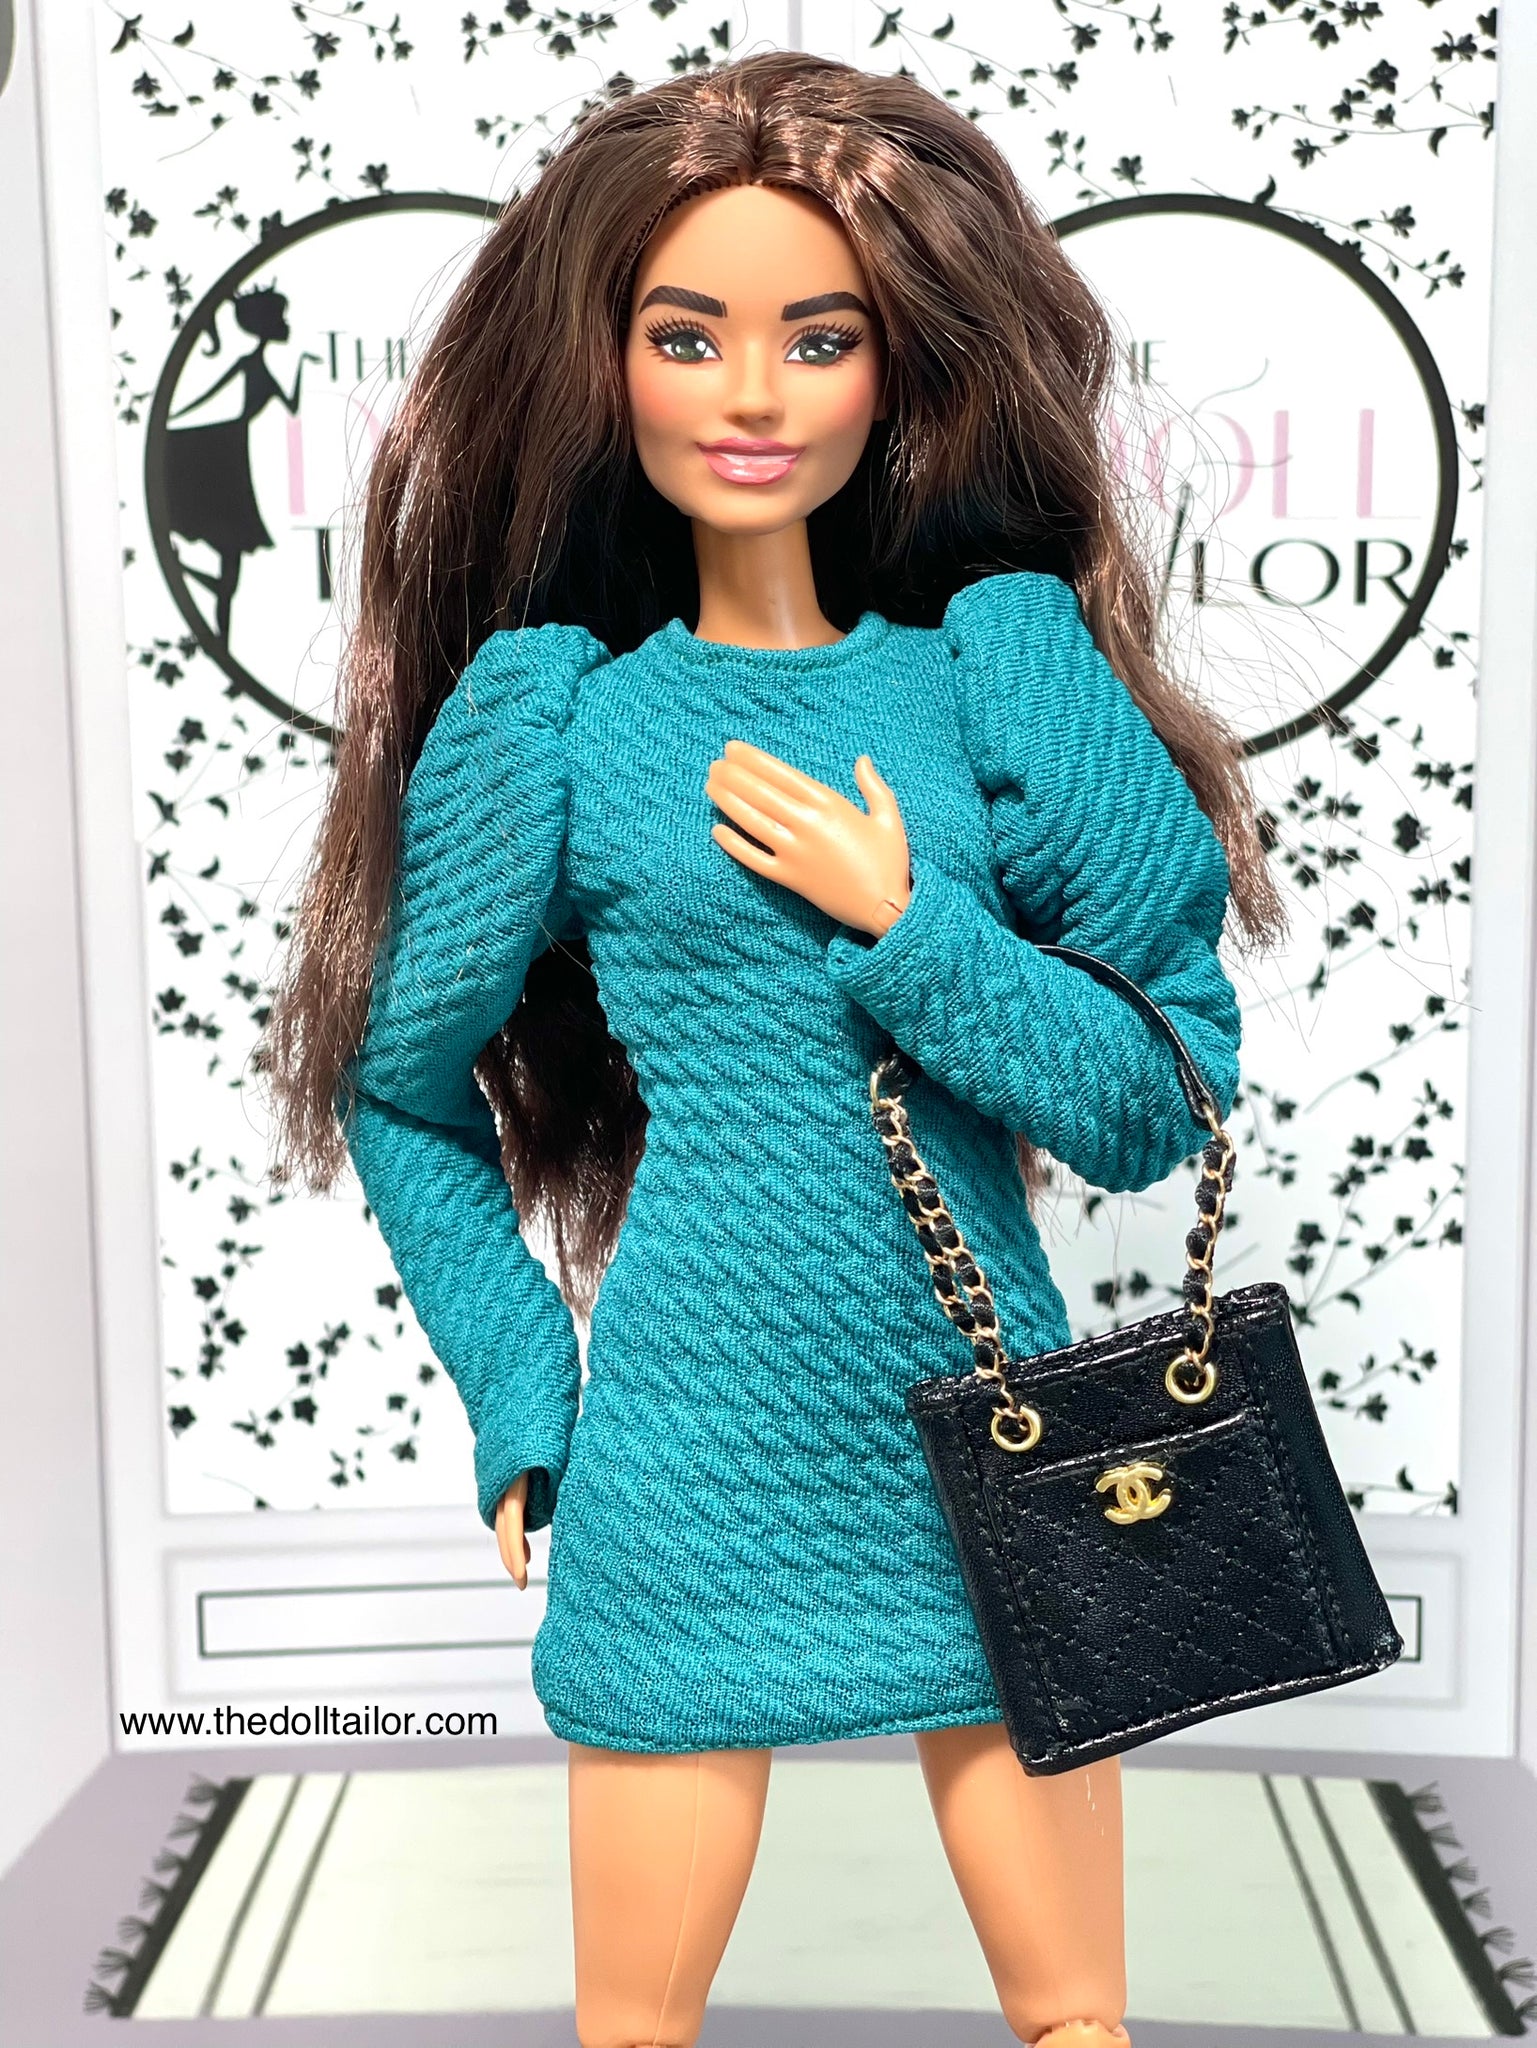 OOAK Doll Purse: Barbie, Monster High, Equestria Girls, Bratz, Silkstone,  Dolls | eBay